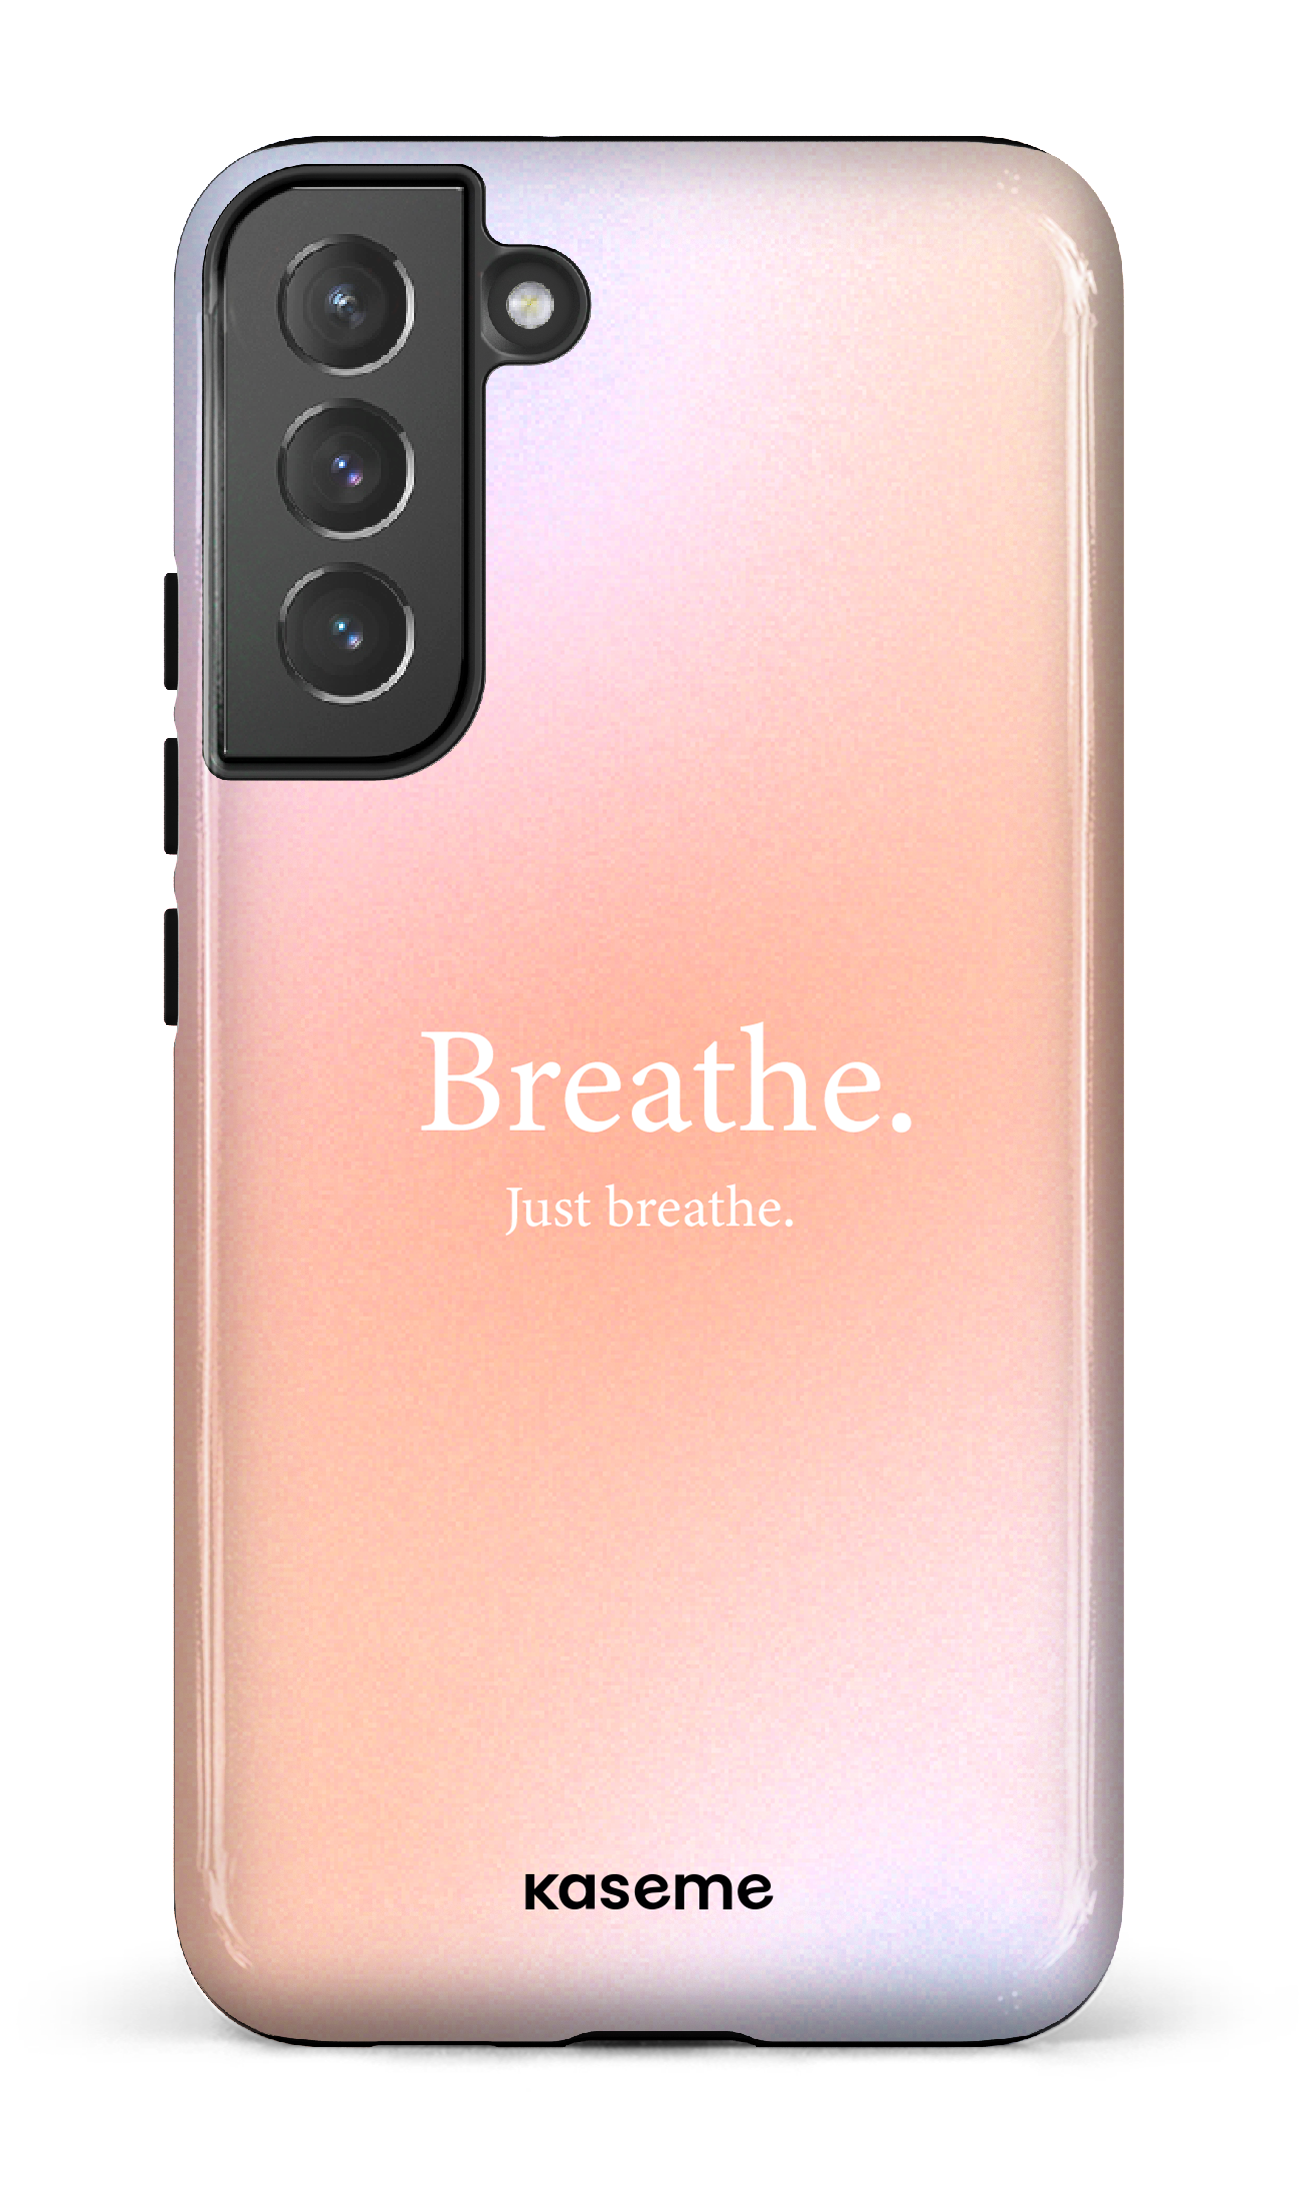 Just breathe - Galaxy S22 Plus